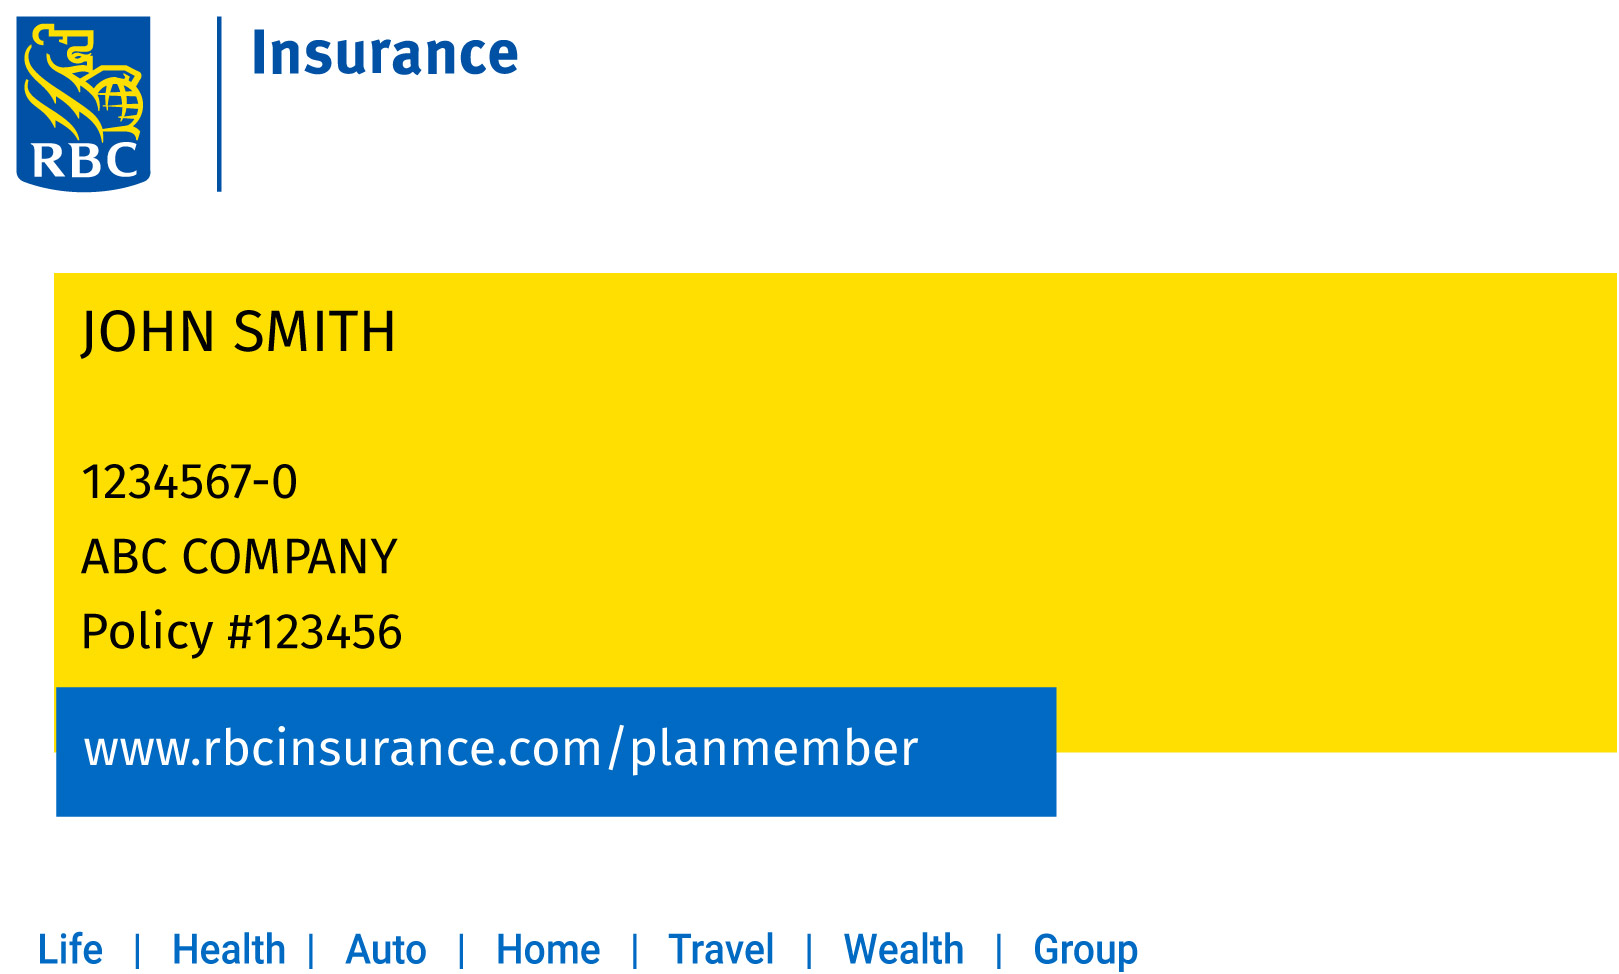 rbc travel insurance wallet card